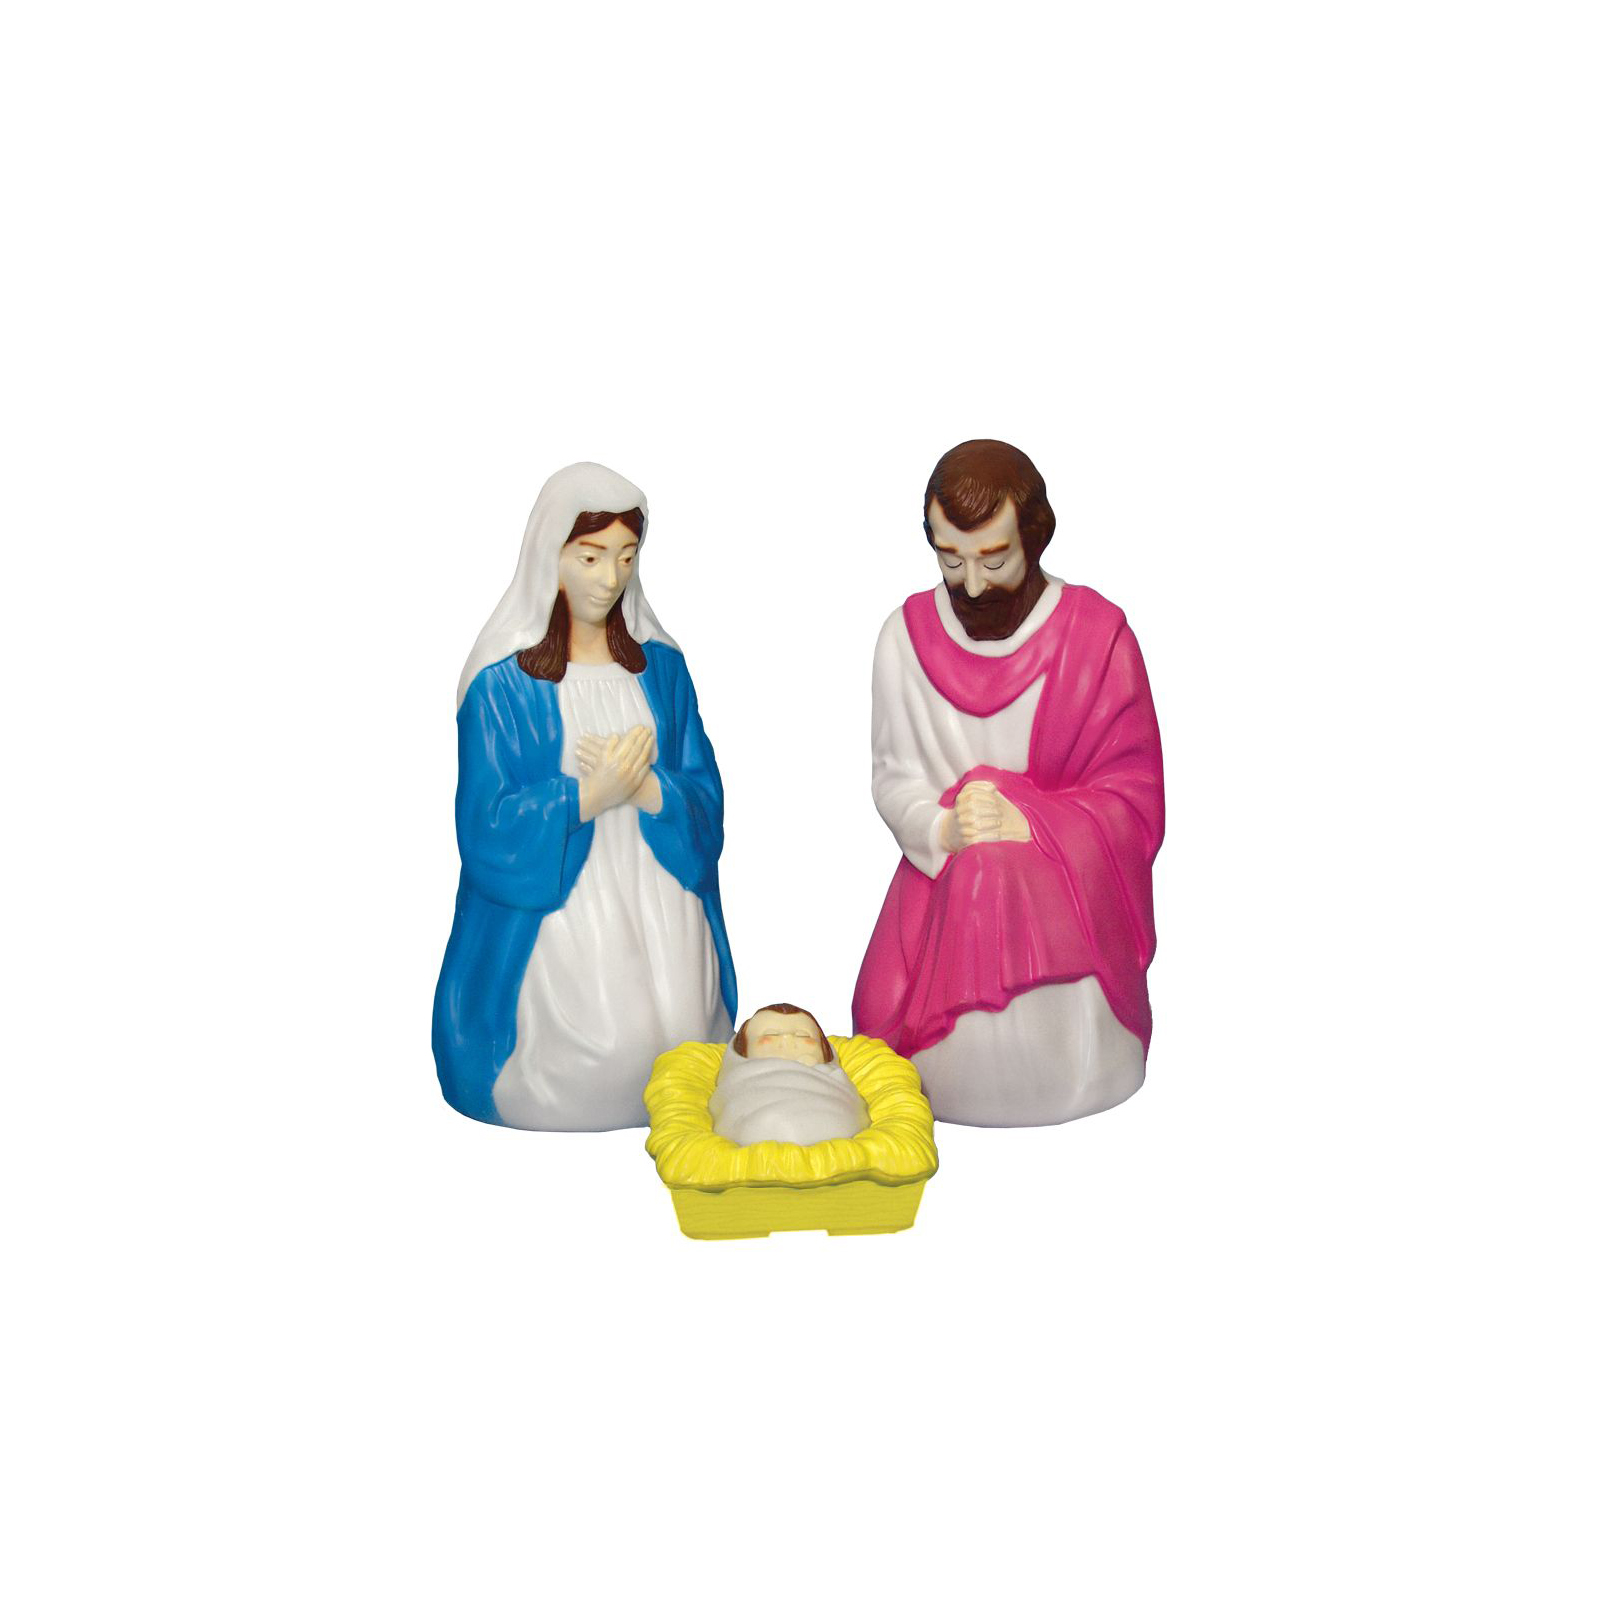 General Foam Plastics 3-Piece Lighted Outdoor Christmas Nativity Scene. 